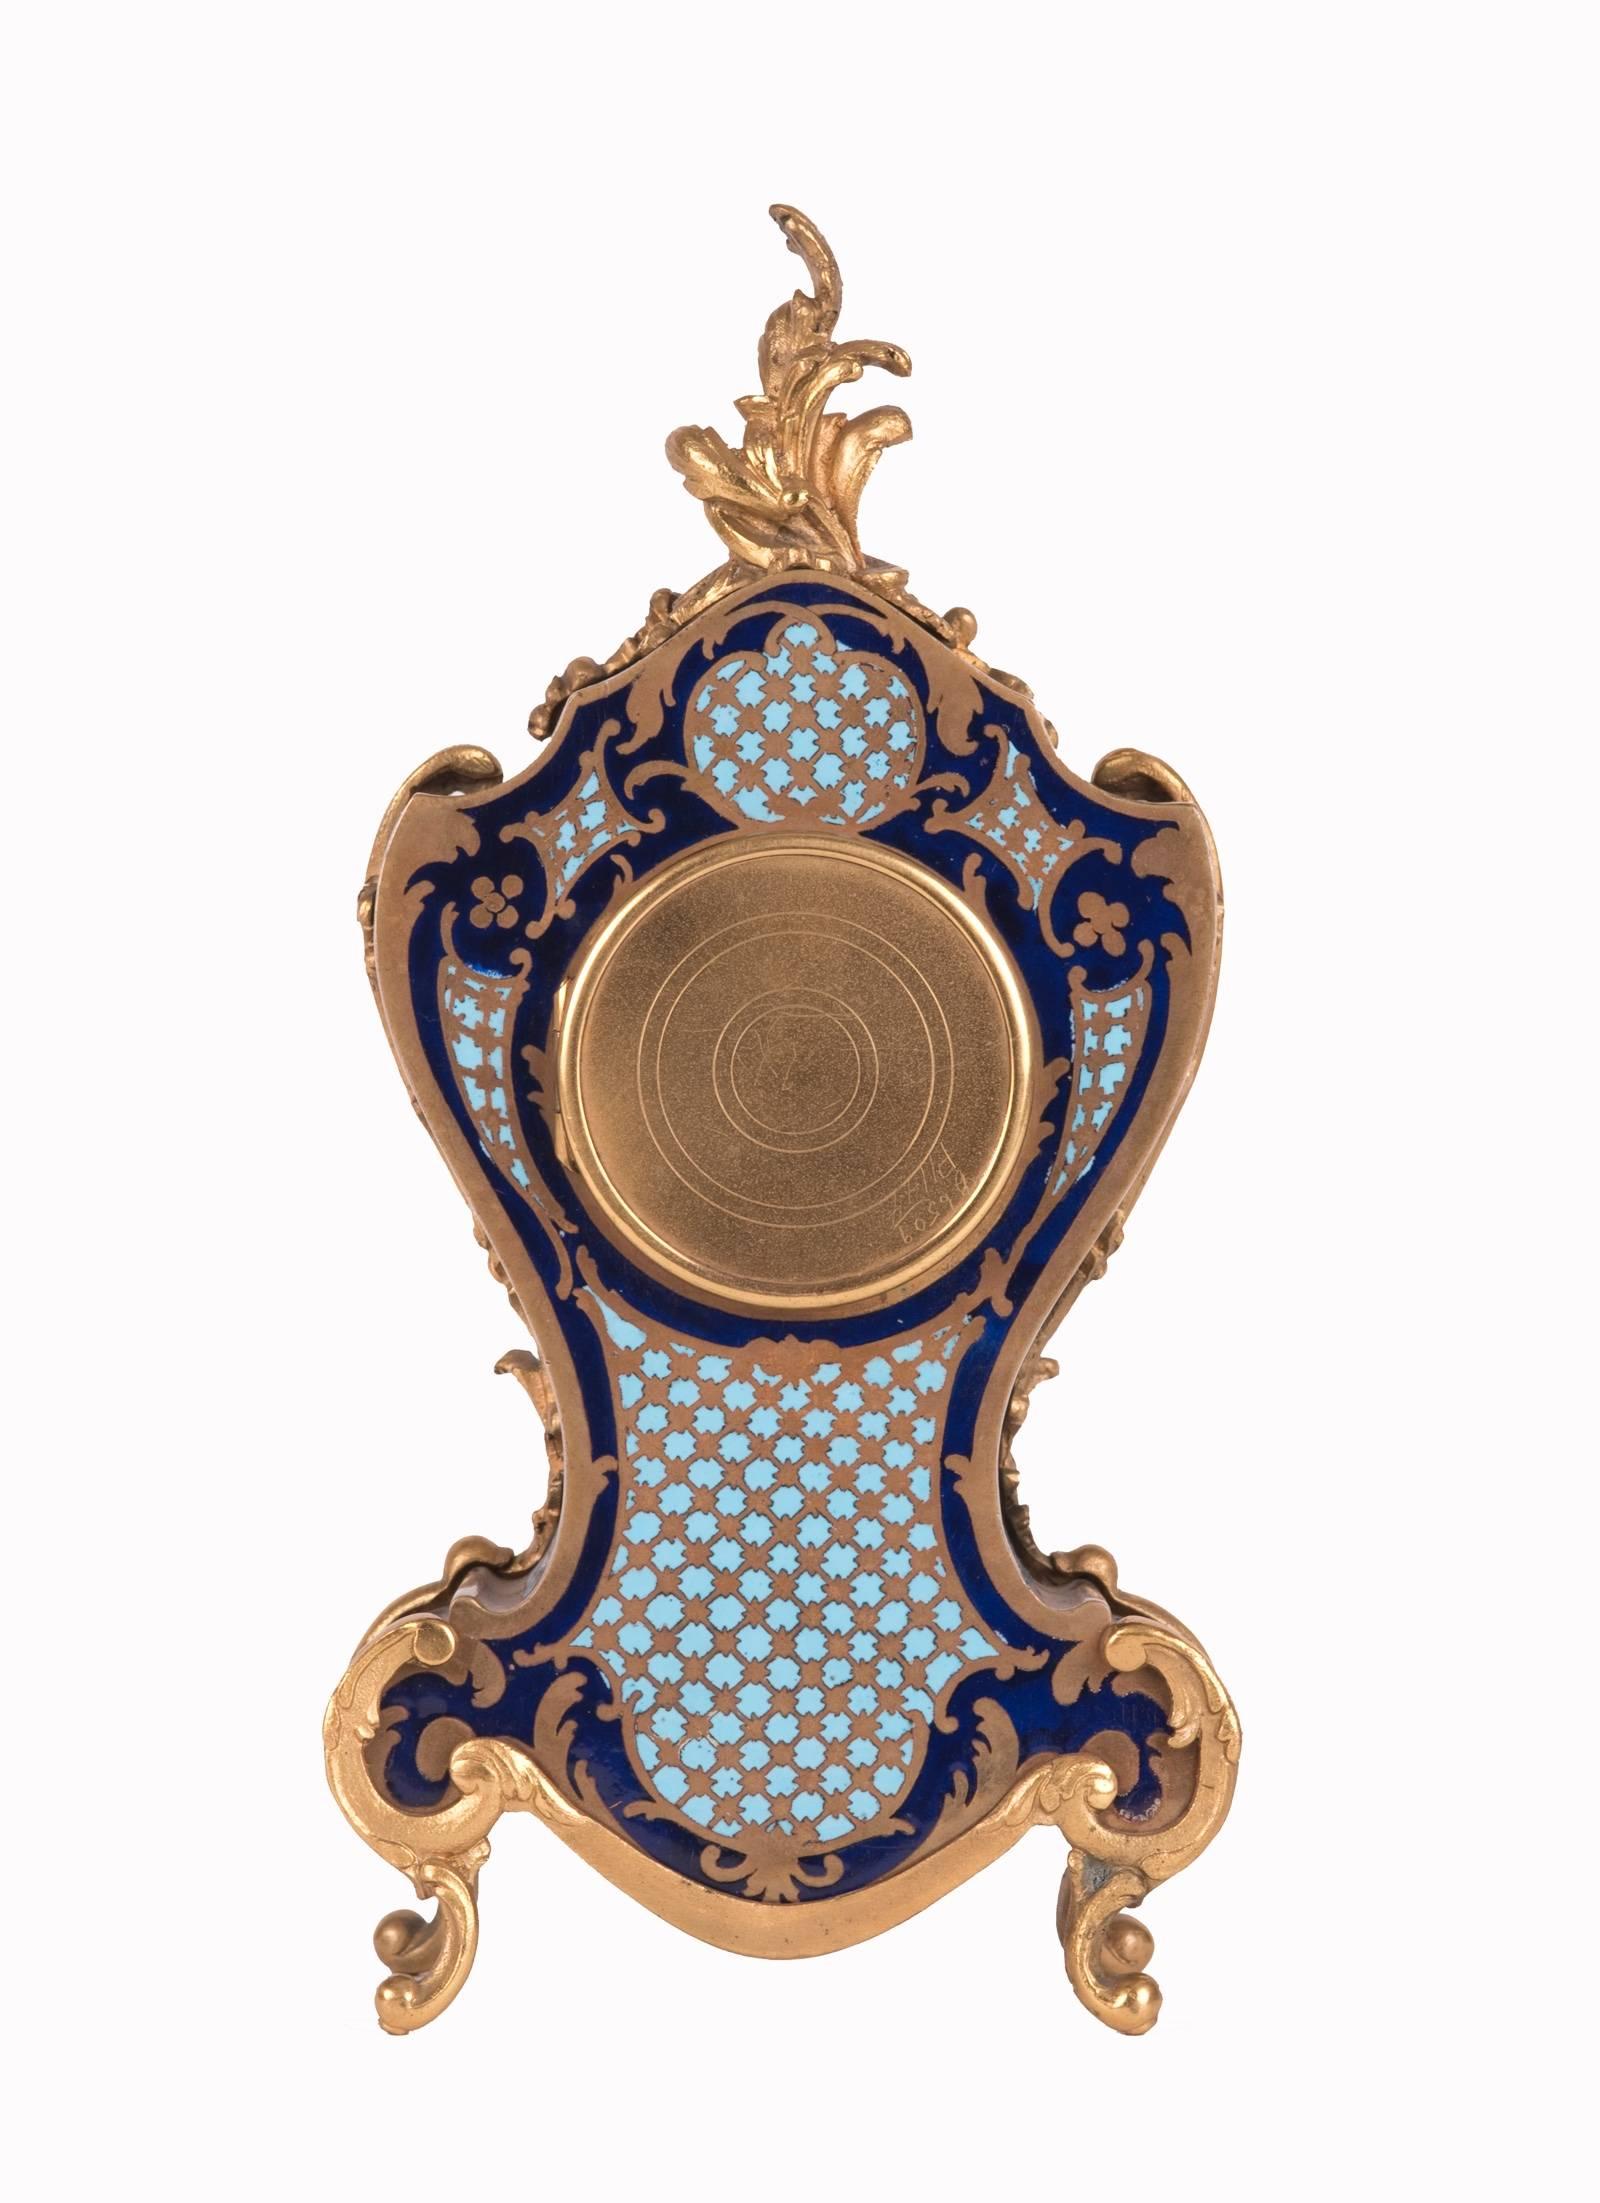 19th Century Louis XV Style Cloisonné Gilt Bronze-Mounted Mantel Clock For Sale